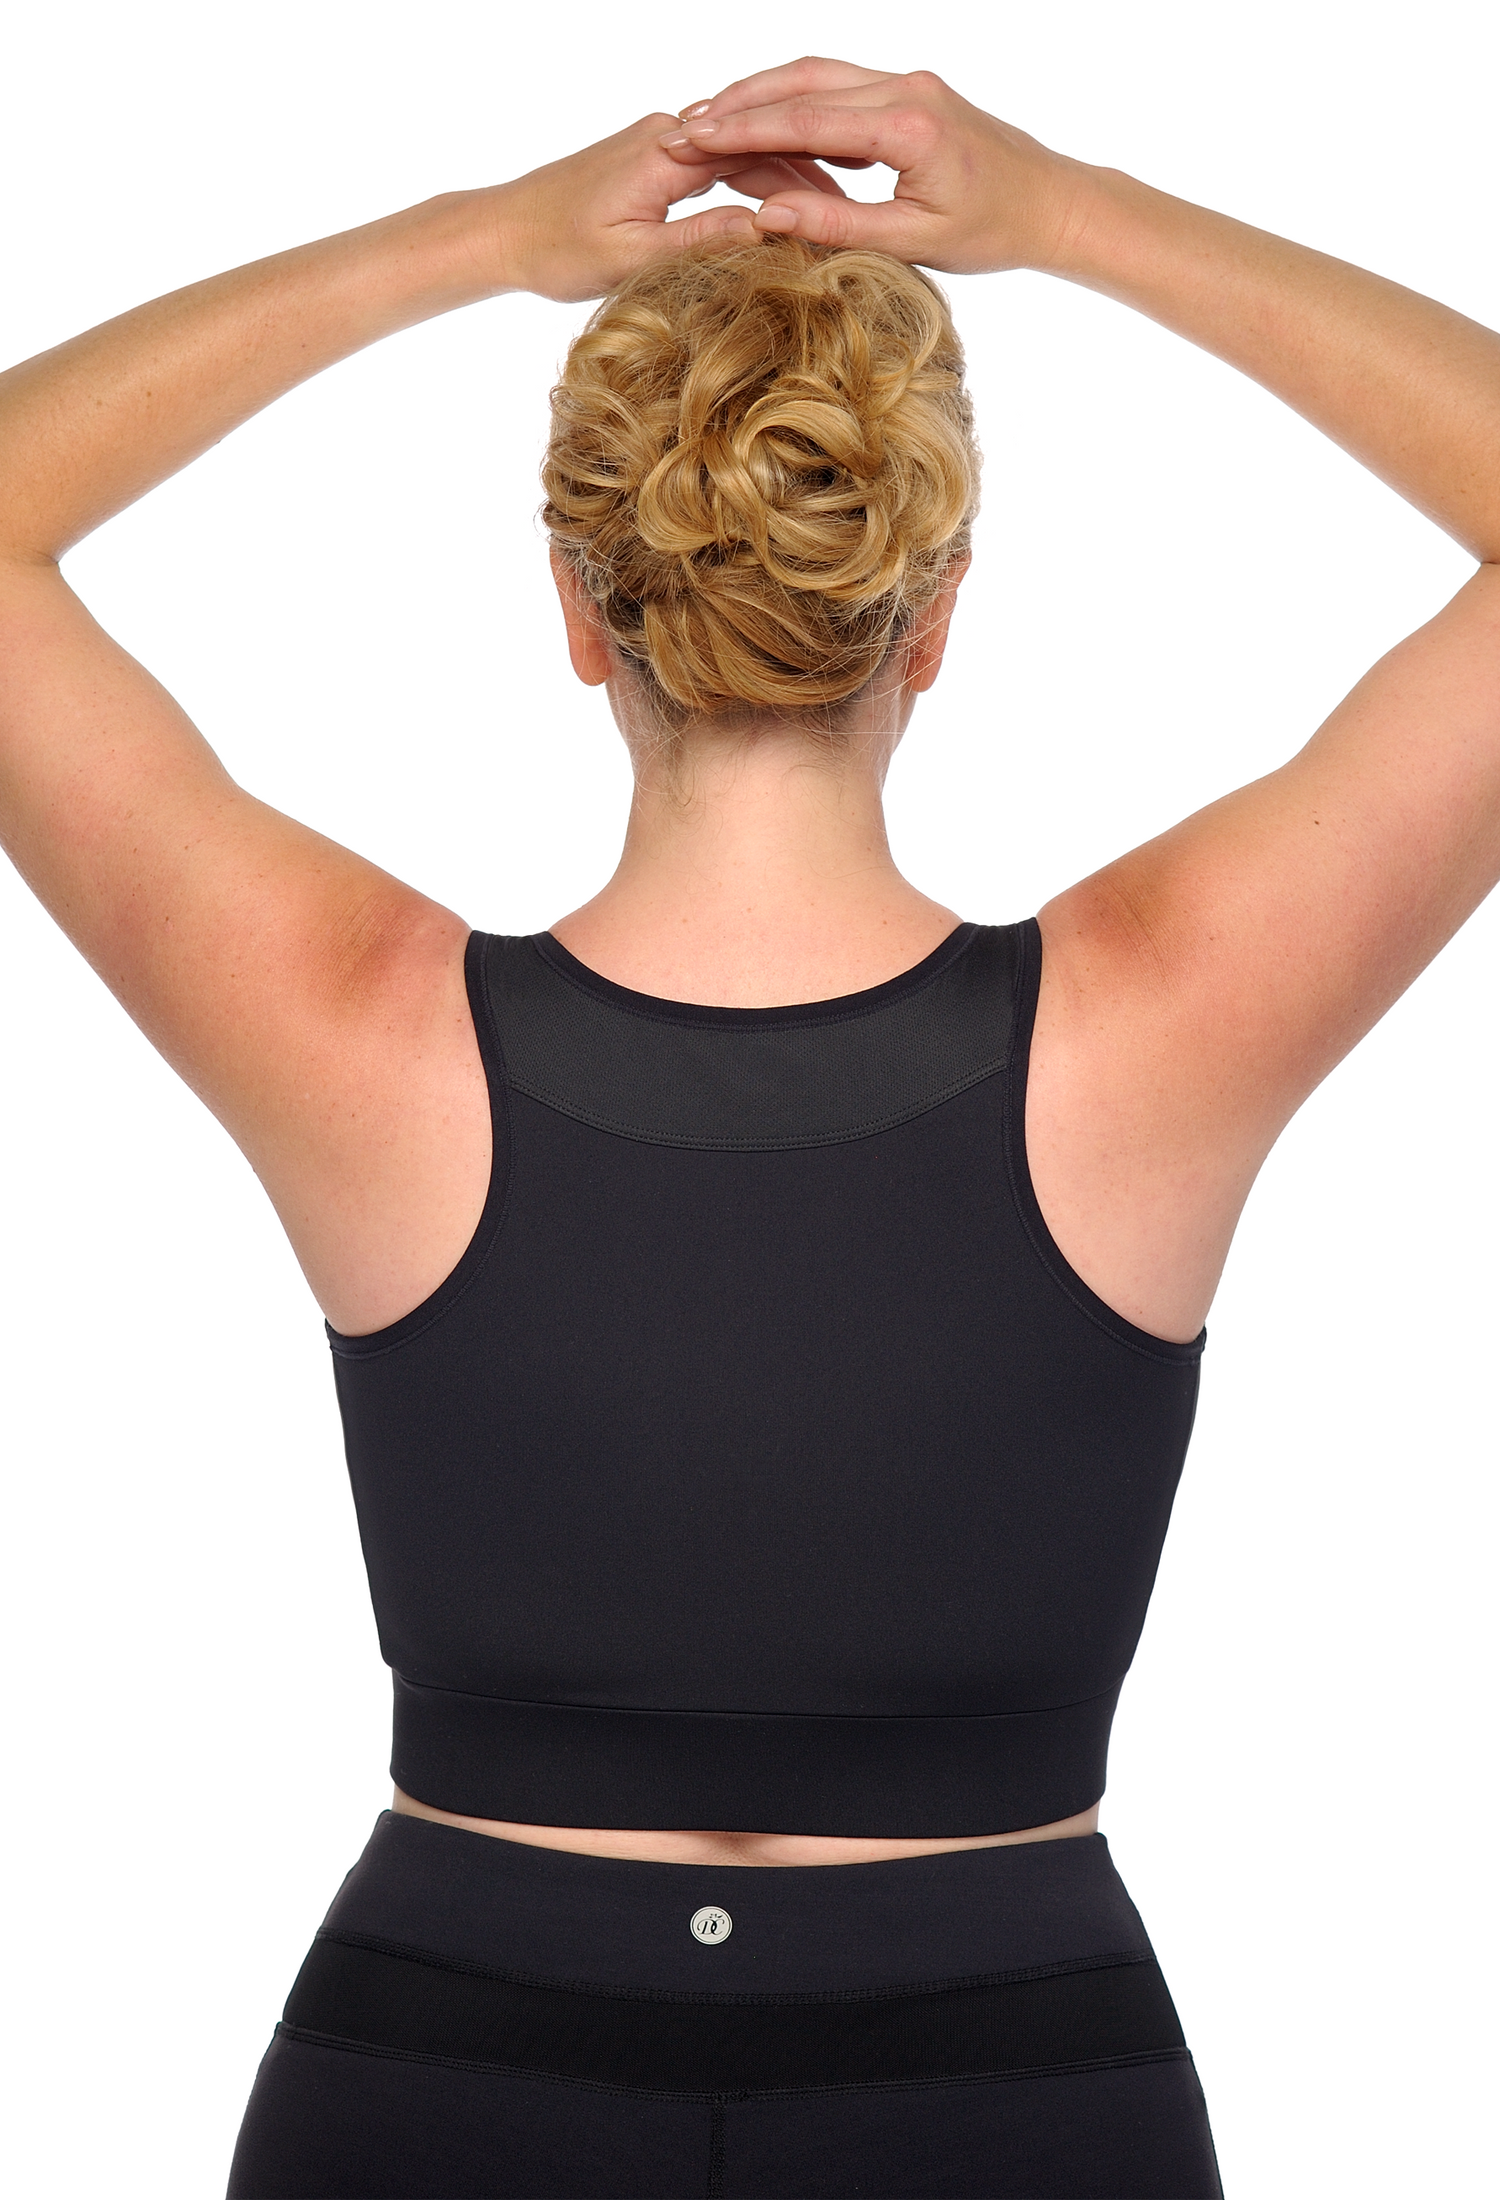 WQQZJJ Sports Bras For Women Women Wireless Anti-sagging Front Zip  Breathable Satin Lace Hem Plus Size Bra Bras For Women Gifts On Clearance 